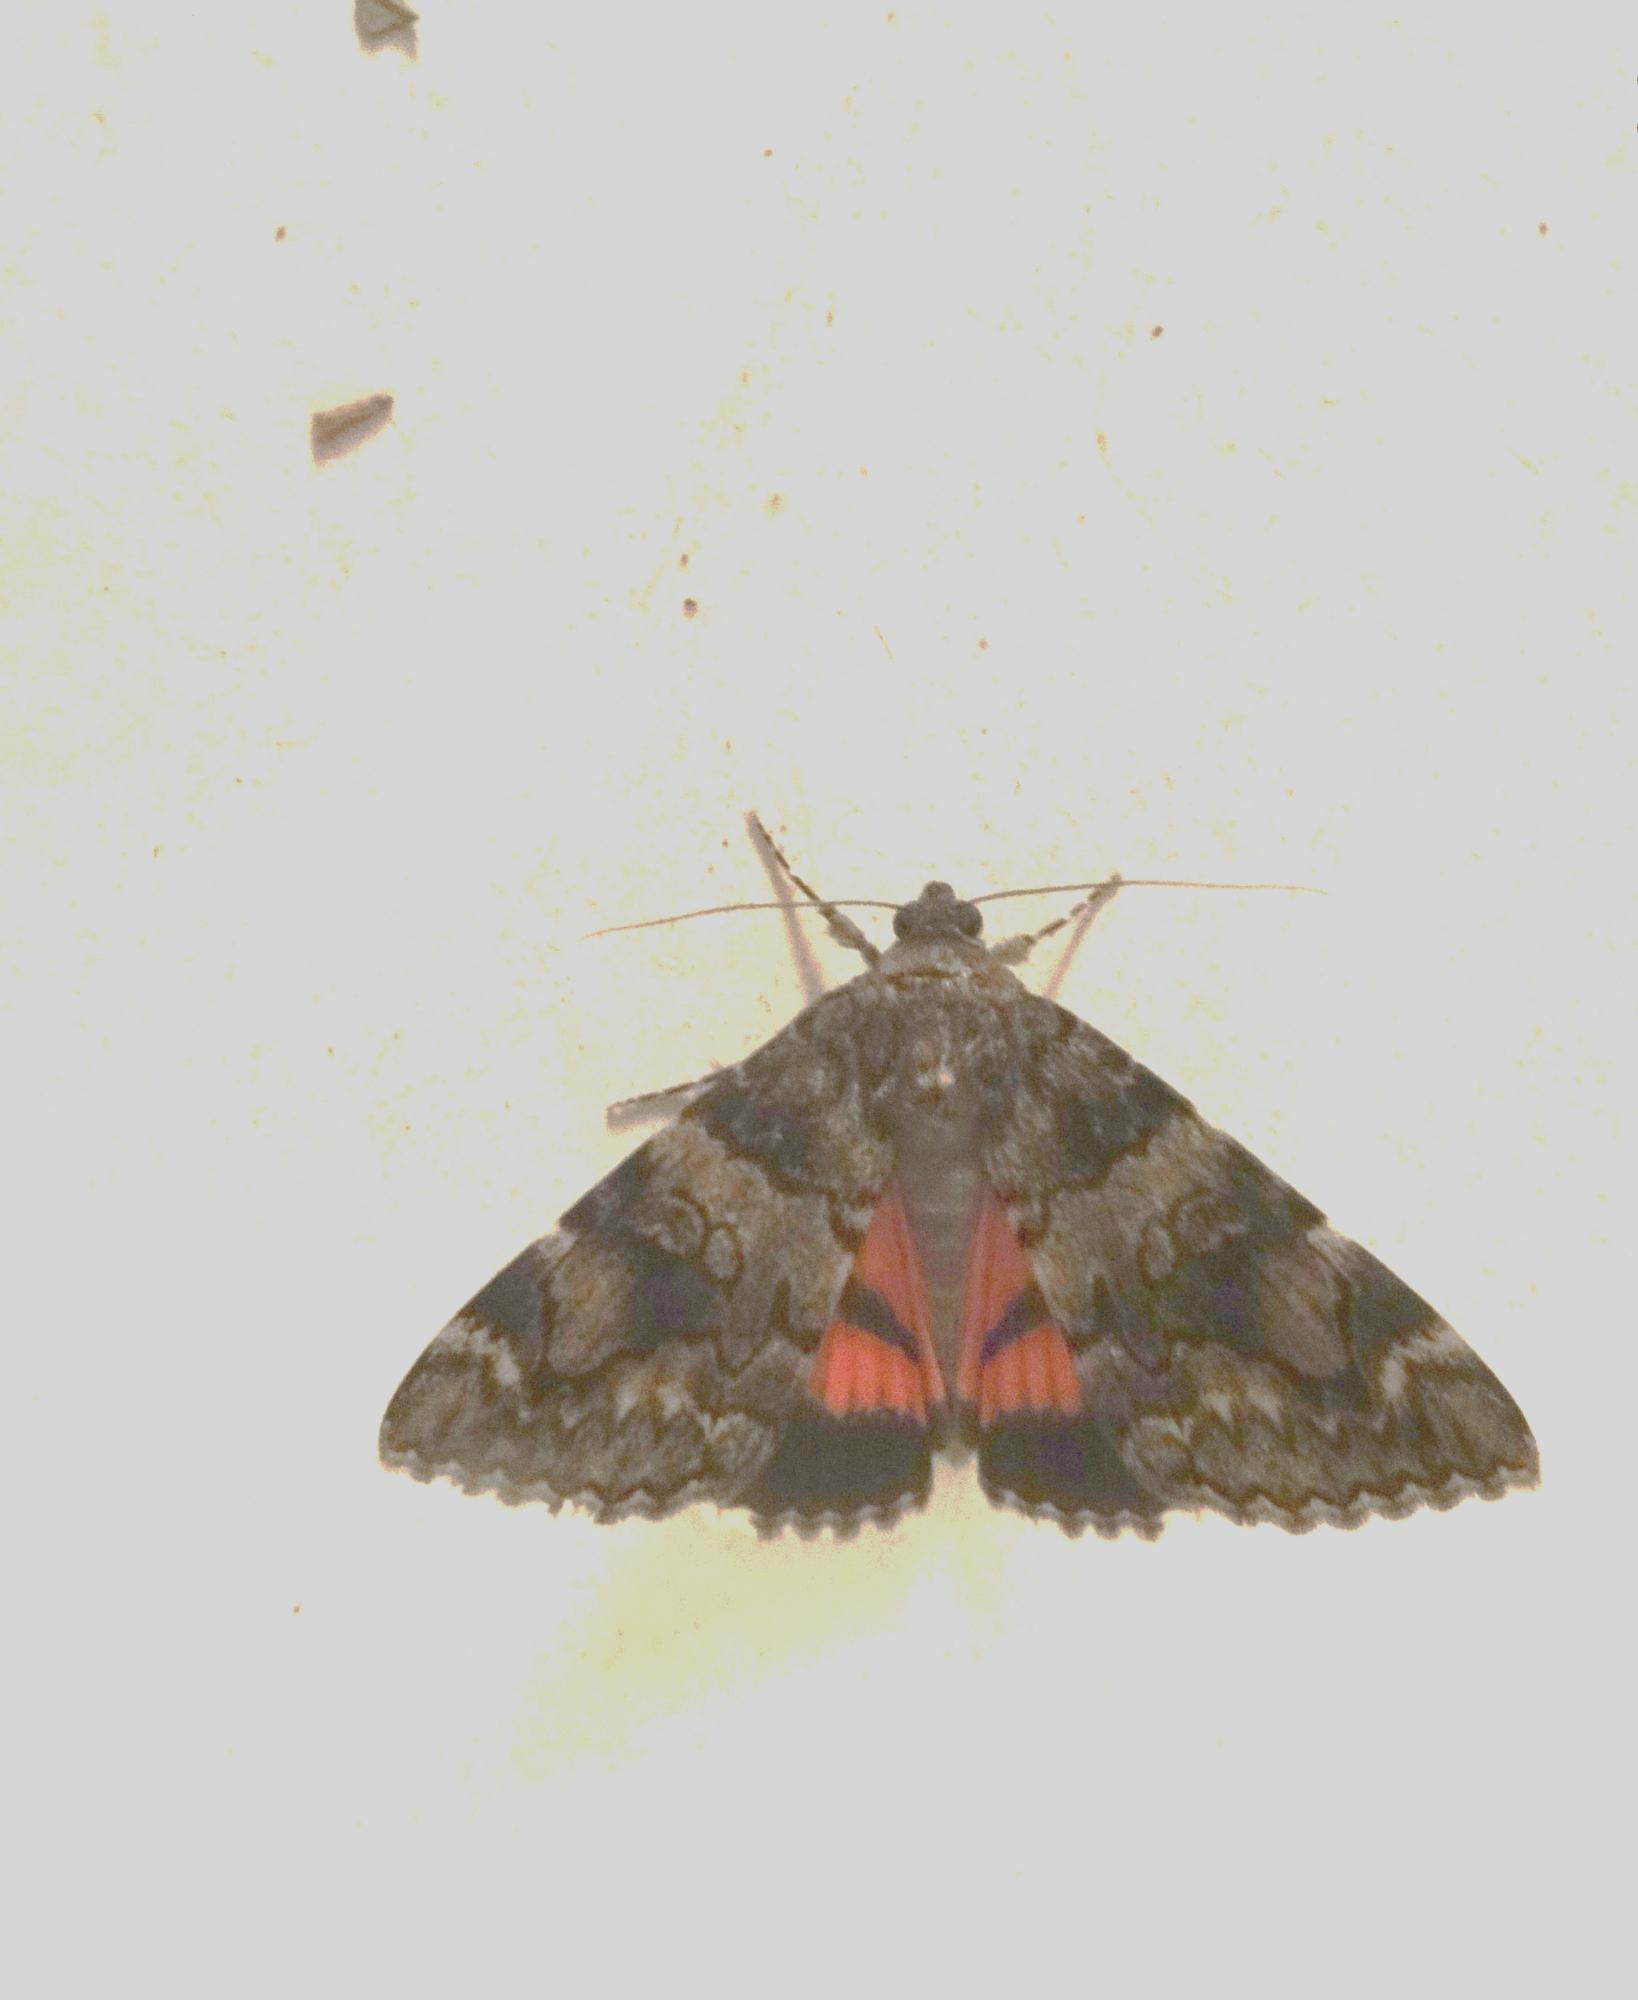 Nom : Papillon nocturne 009.jpg
Affichages : 45
Taille : 124,0 Ko